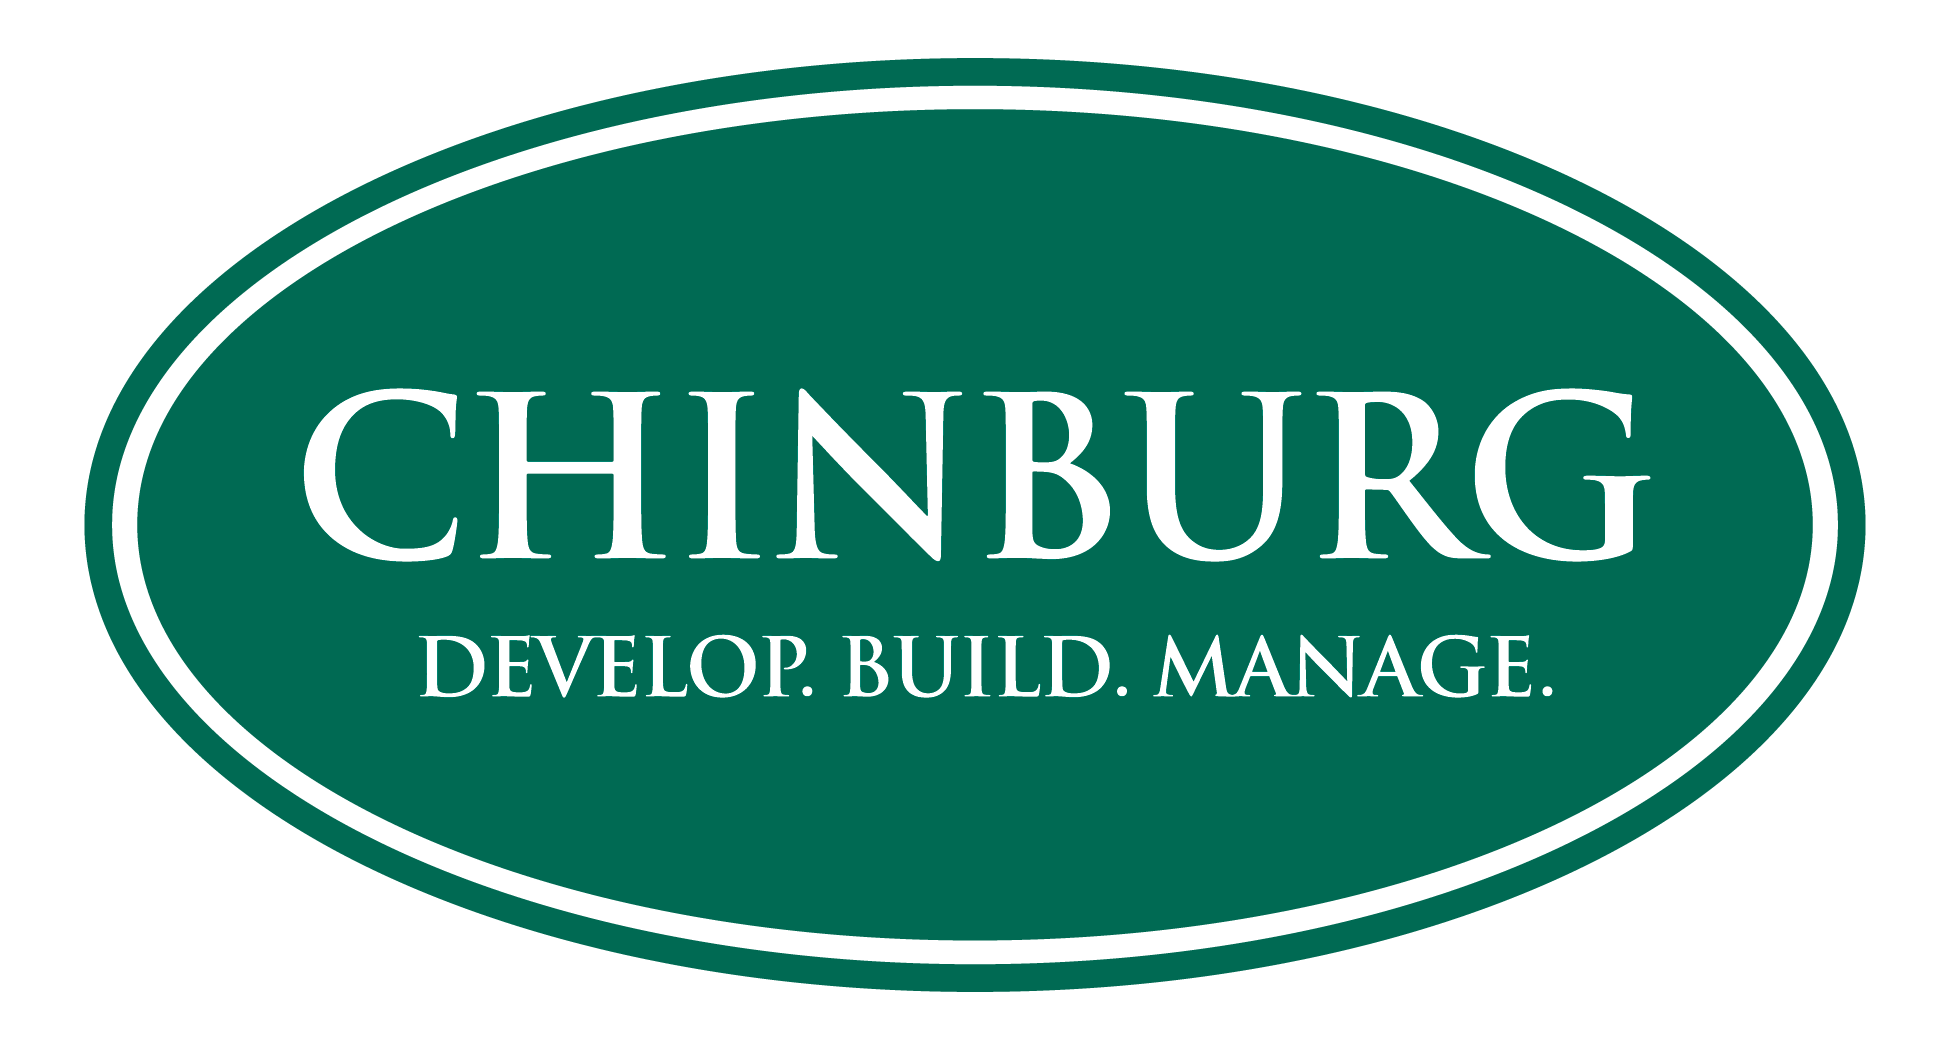 Chinburg Properties logo - The Gove Group